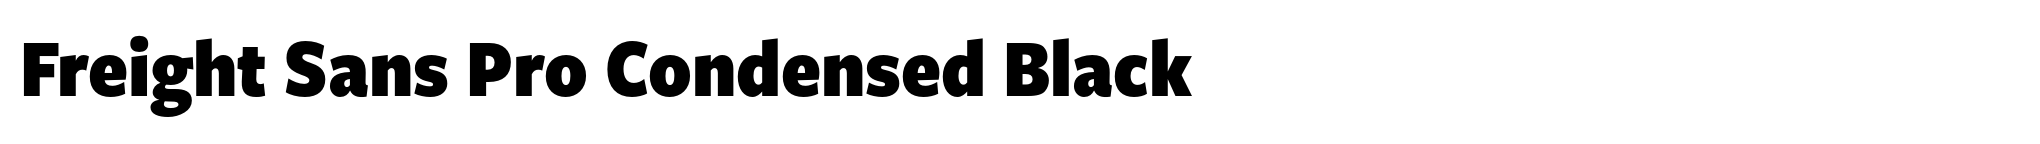 Freight Sans Pro Condensed Black image